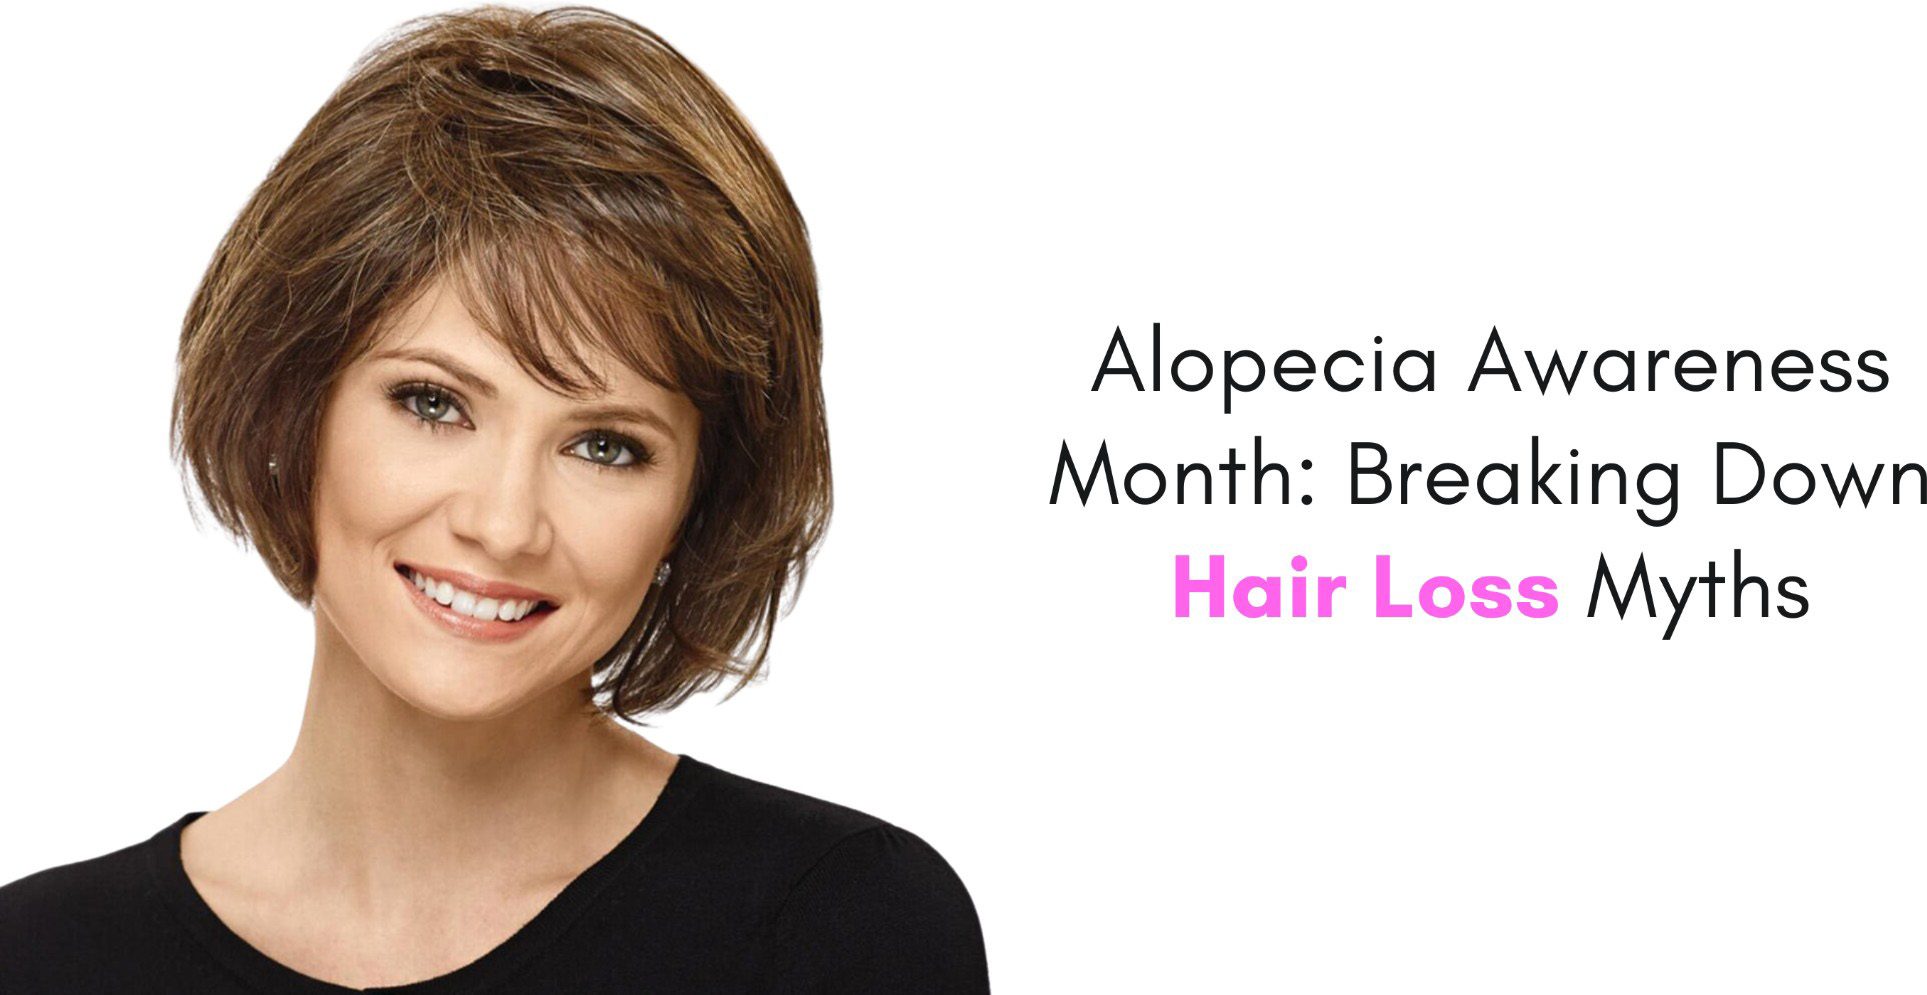 Alopecia Awareness Month: Breaking Down Hair Loss Myths